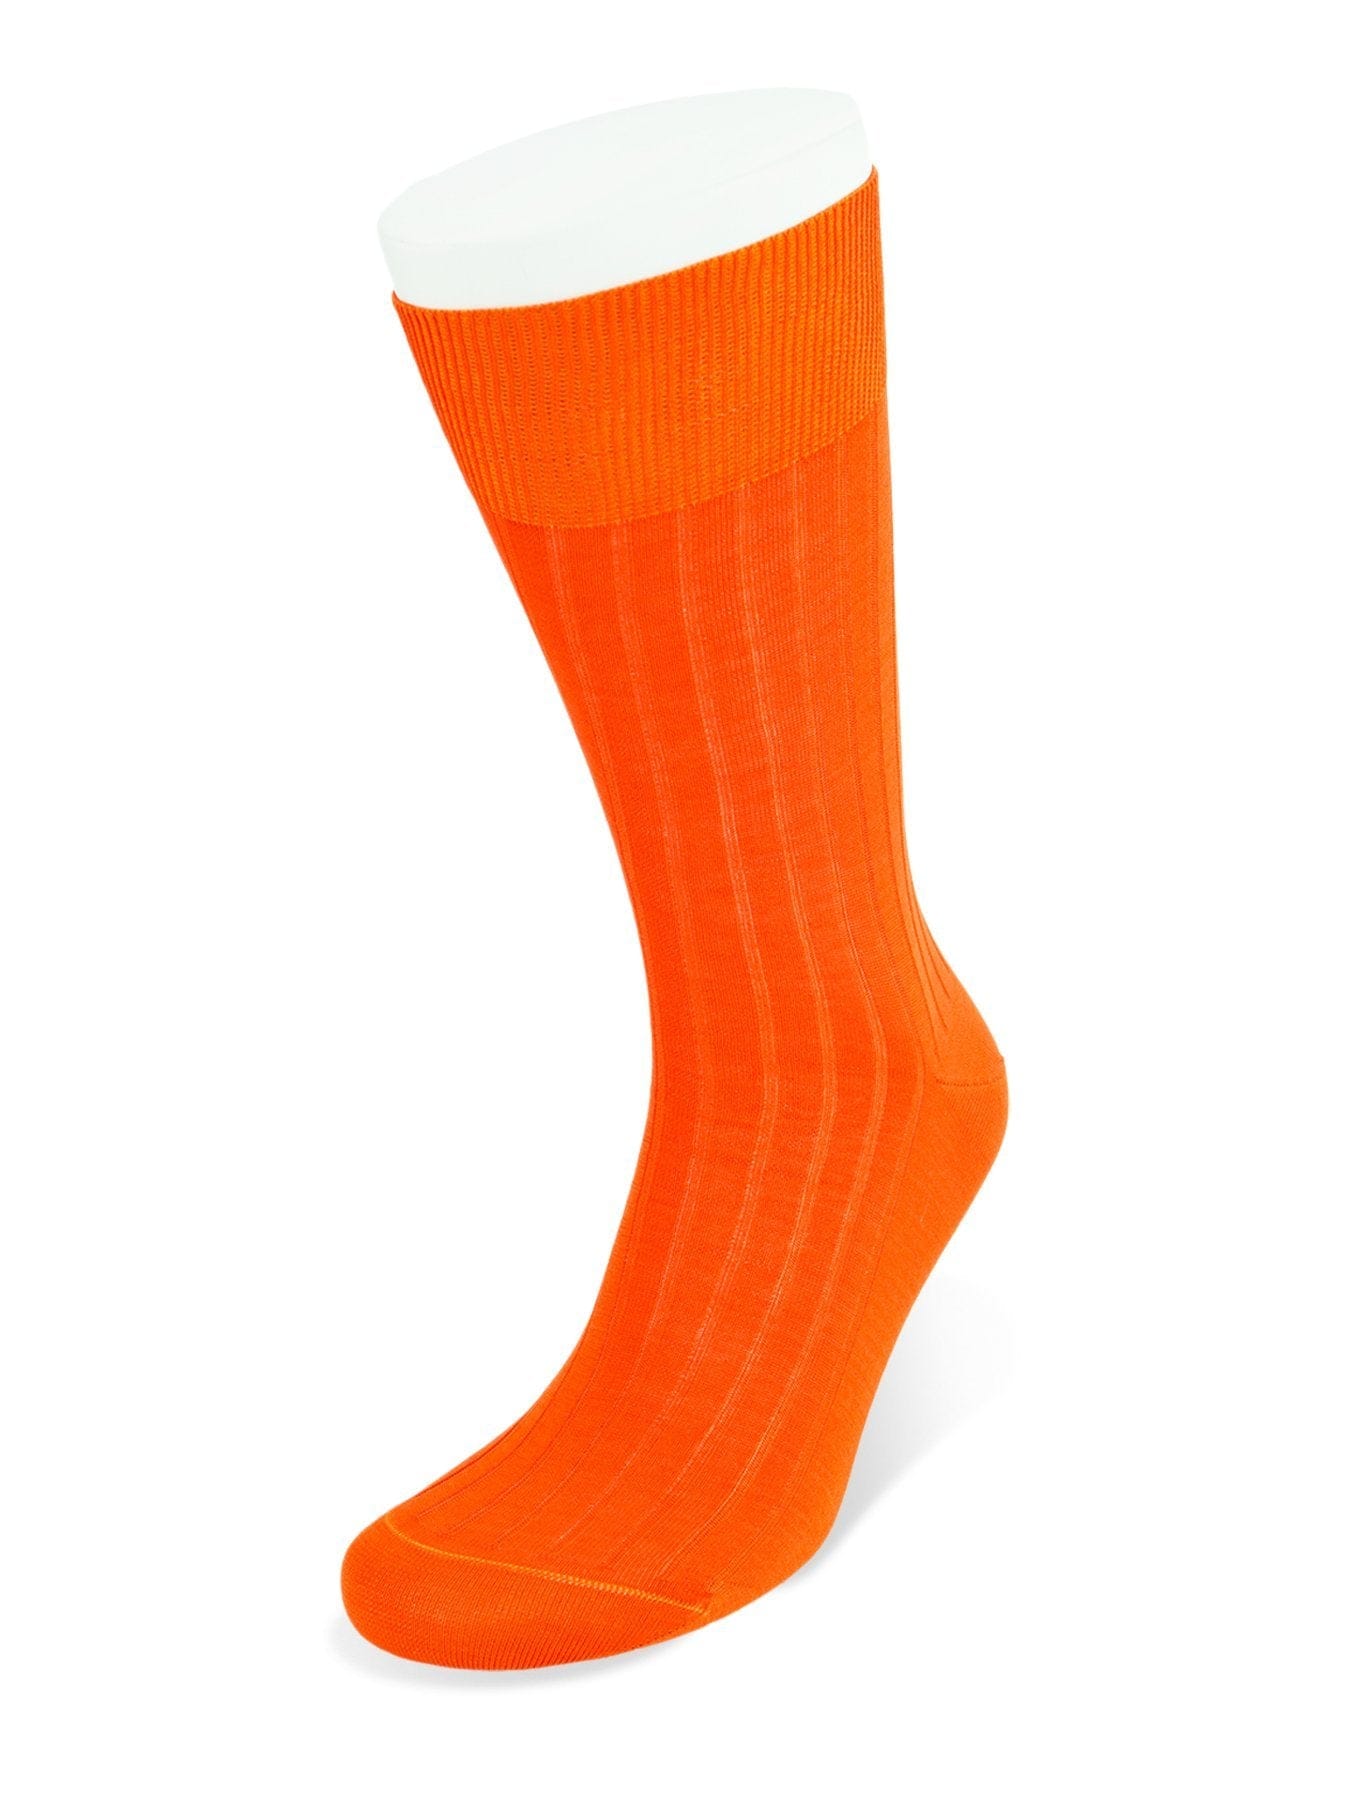 Short Plain Orange Cotton Socks